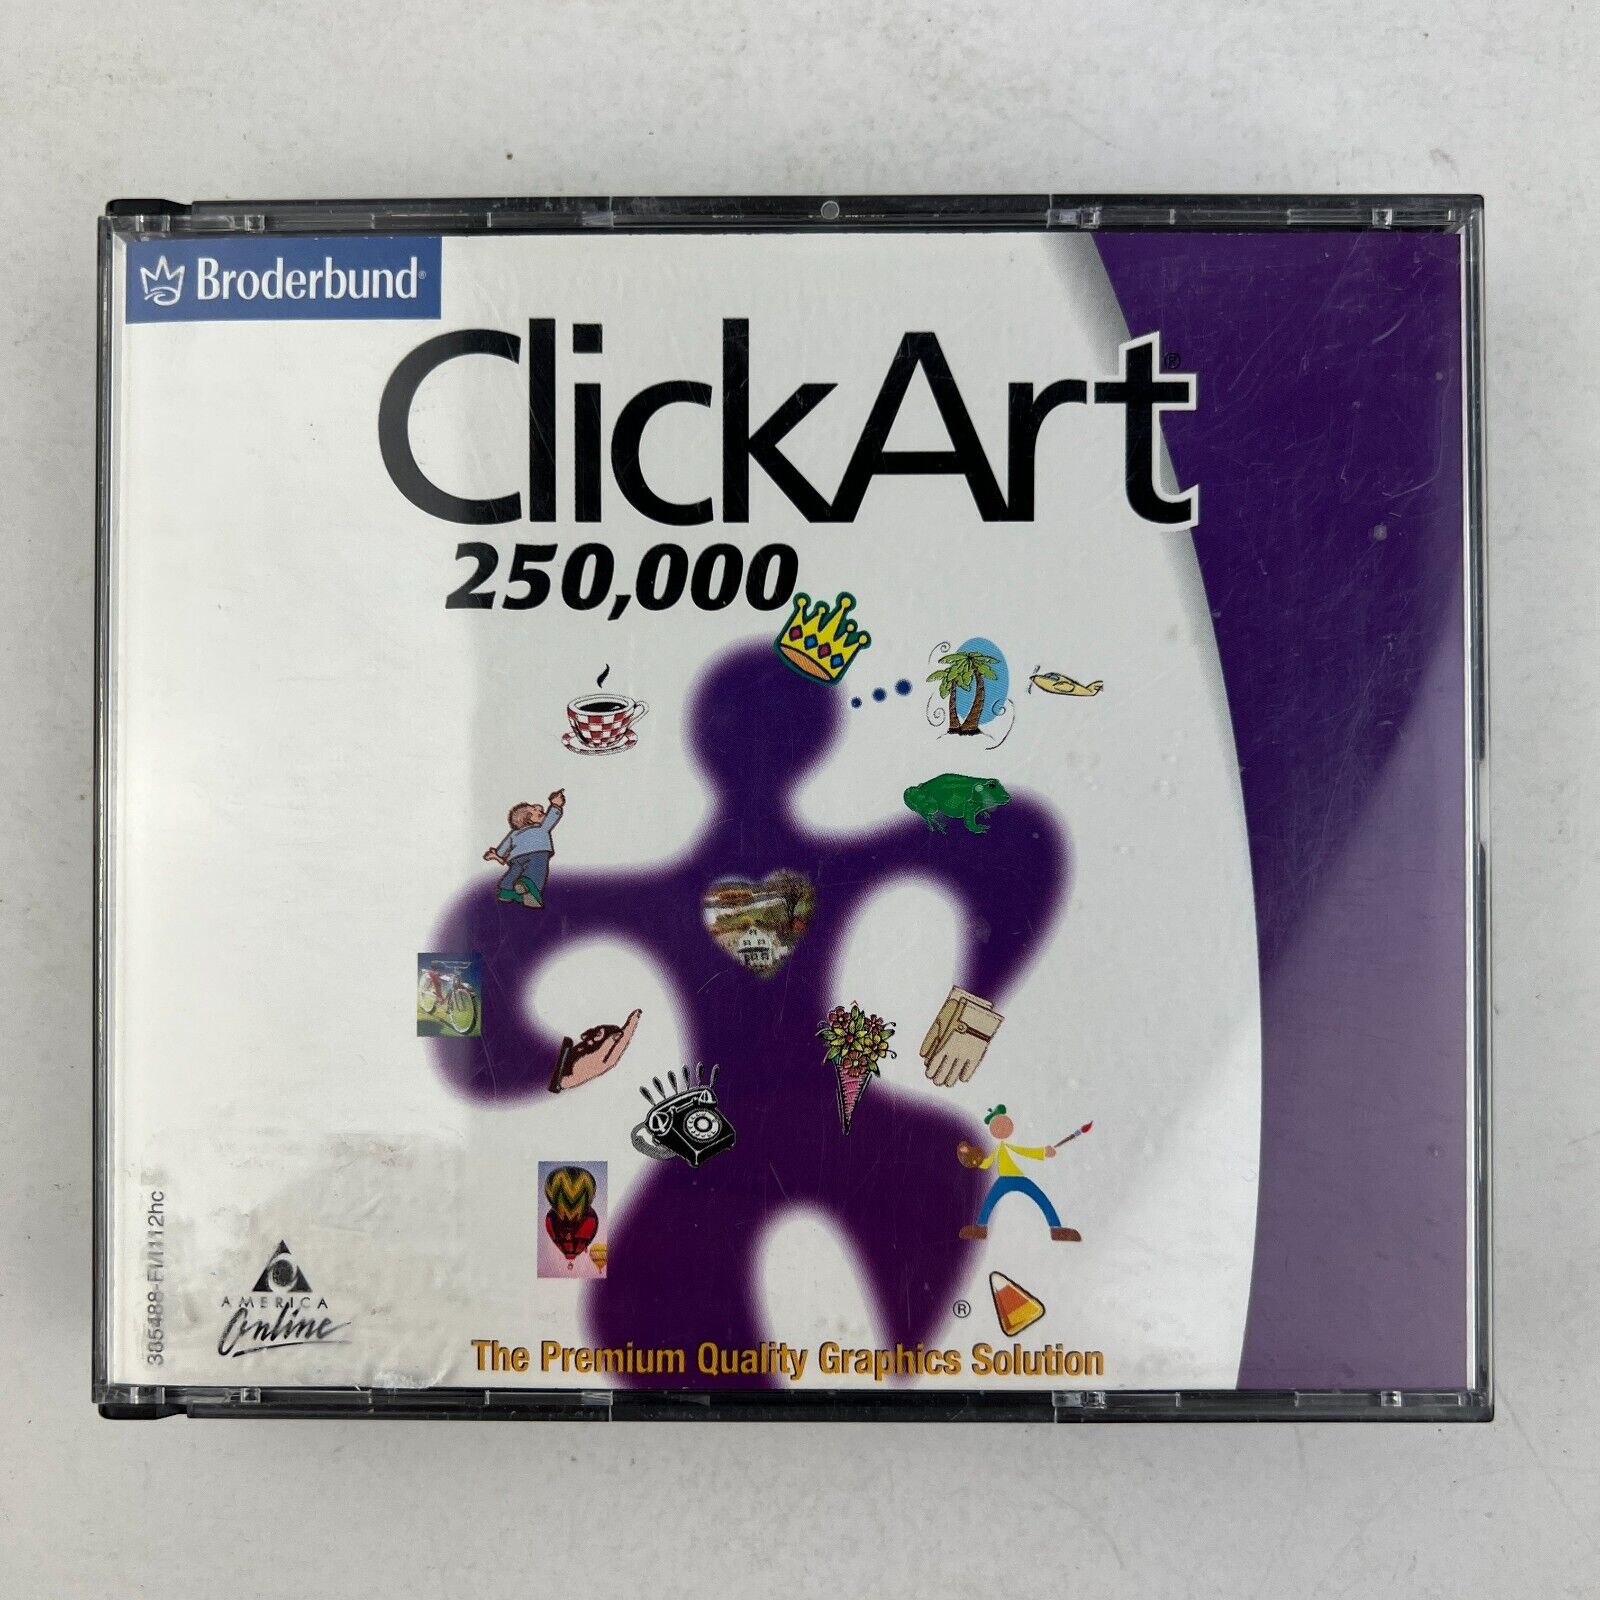 ClickArt 250,000 Premium Quality Graphics Broderbund CD-ROM Windows